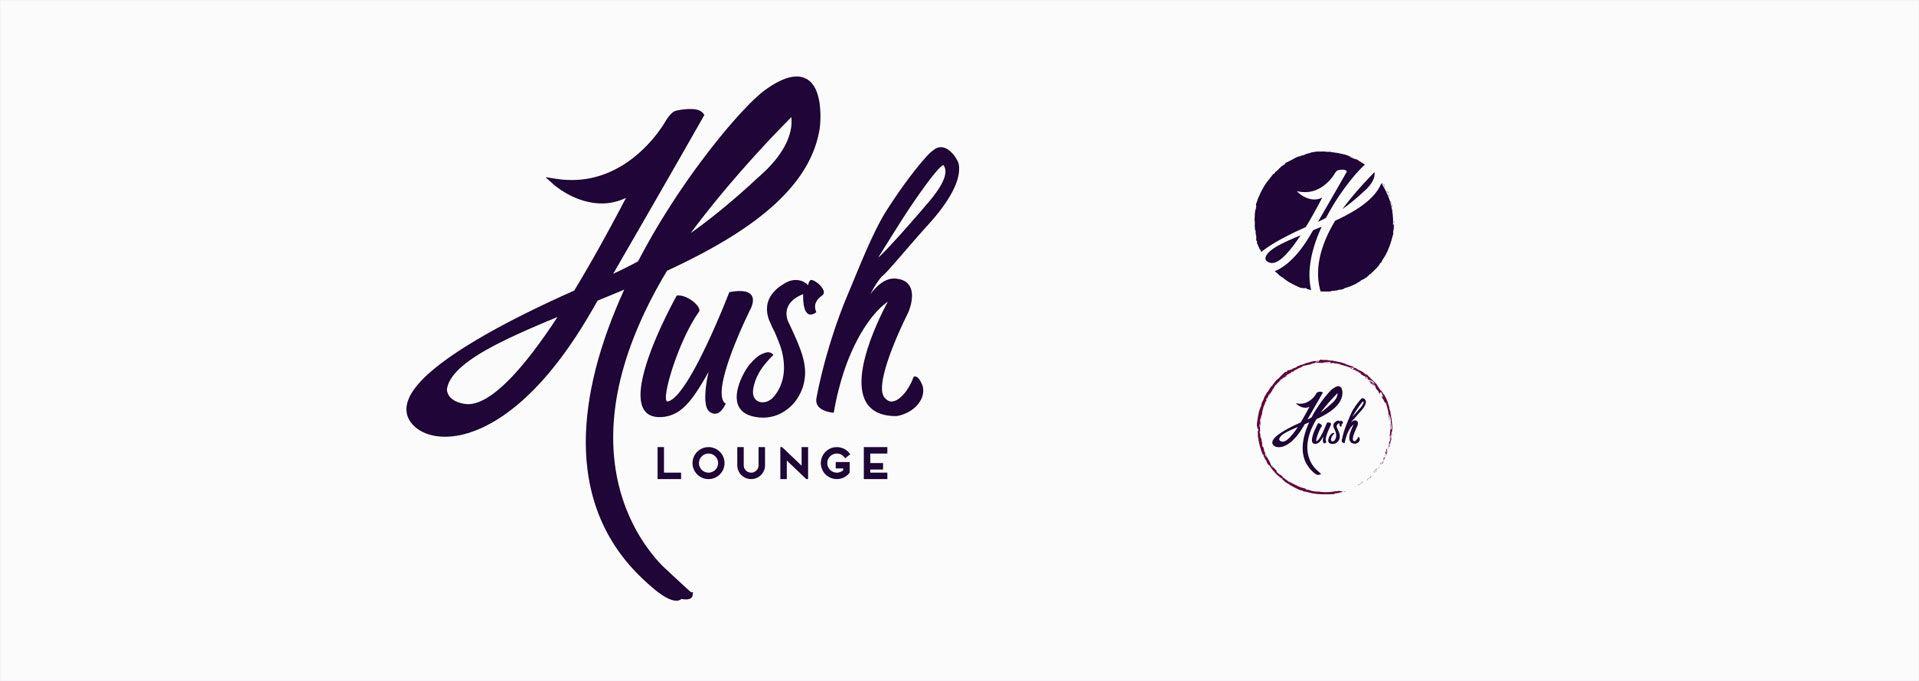 Hush Logo - Revelry Room / Hush Lounge - Tiny Giant